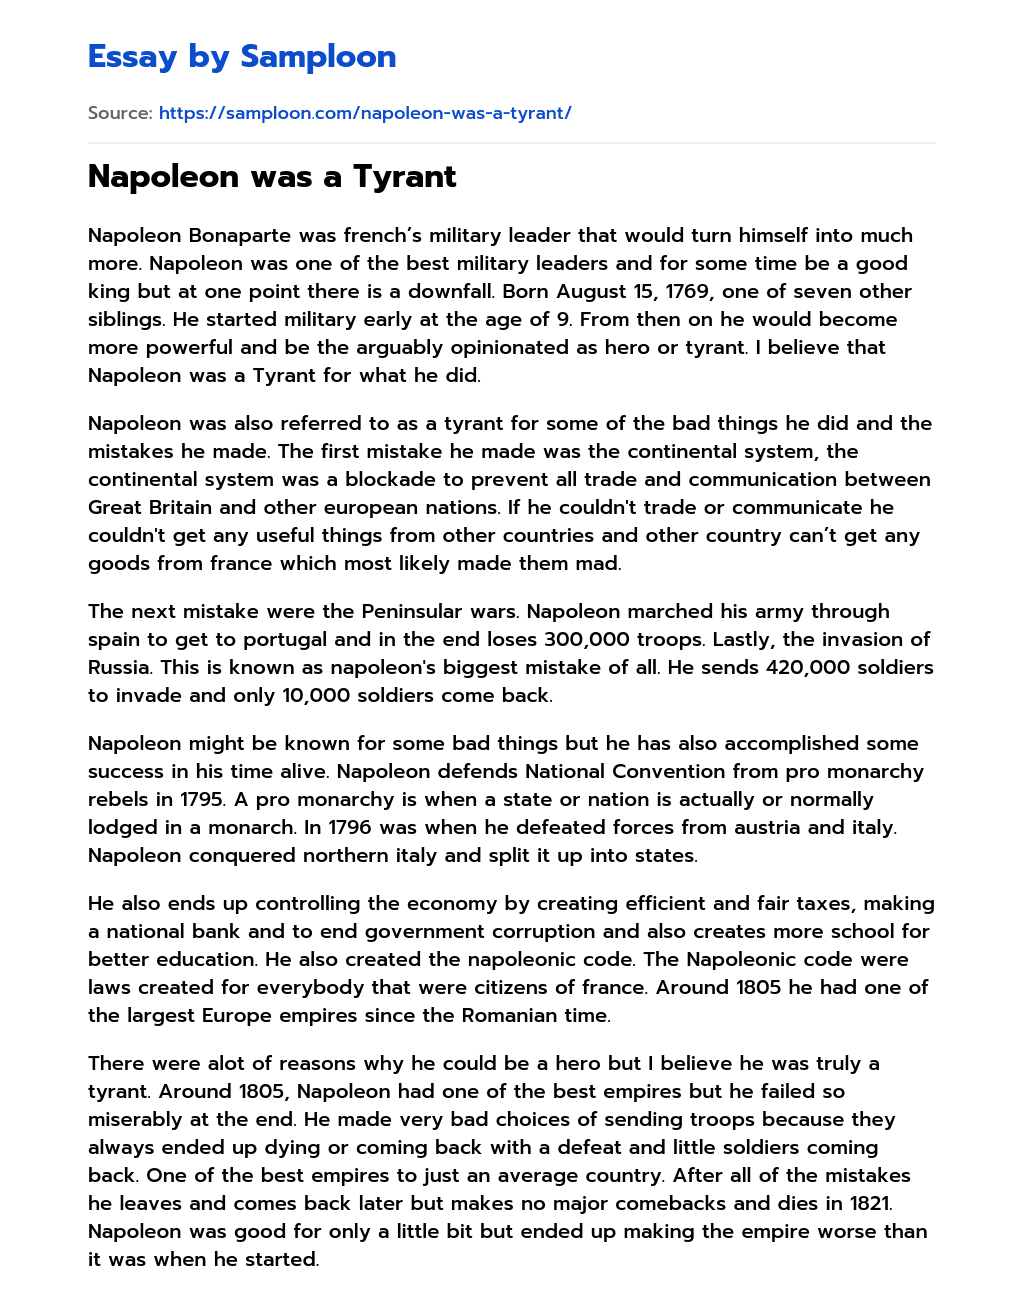 Napoleon was a Tyrant essay